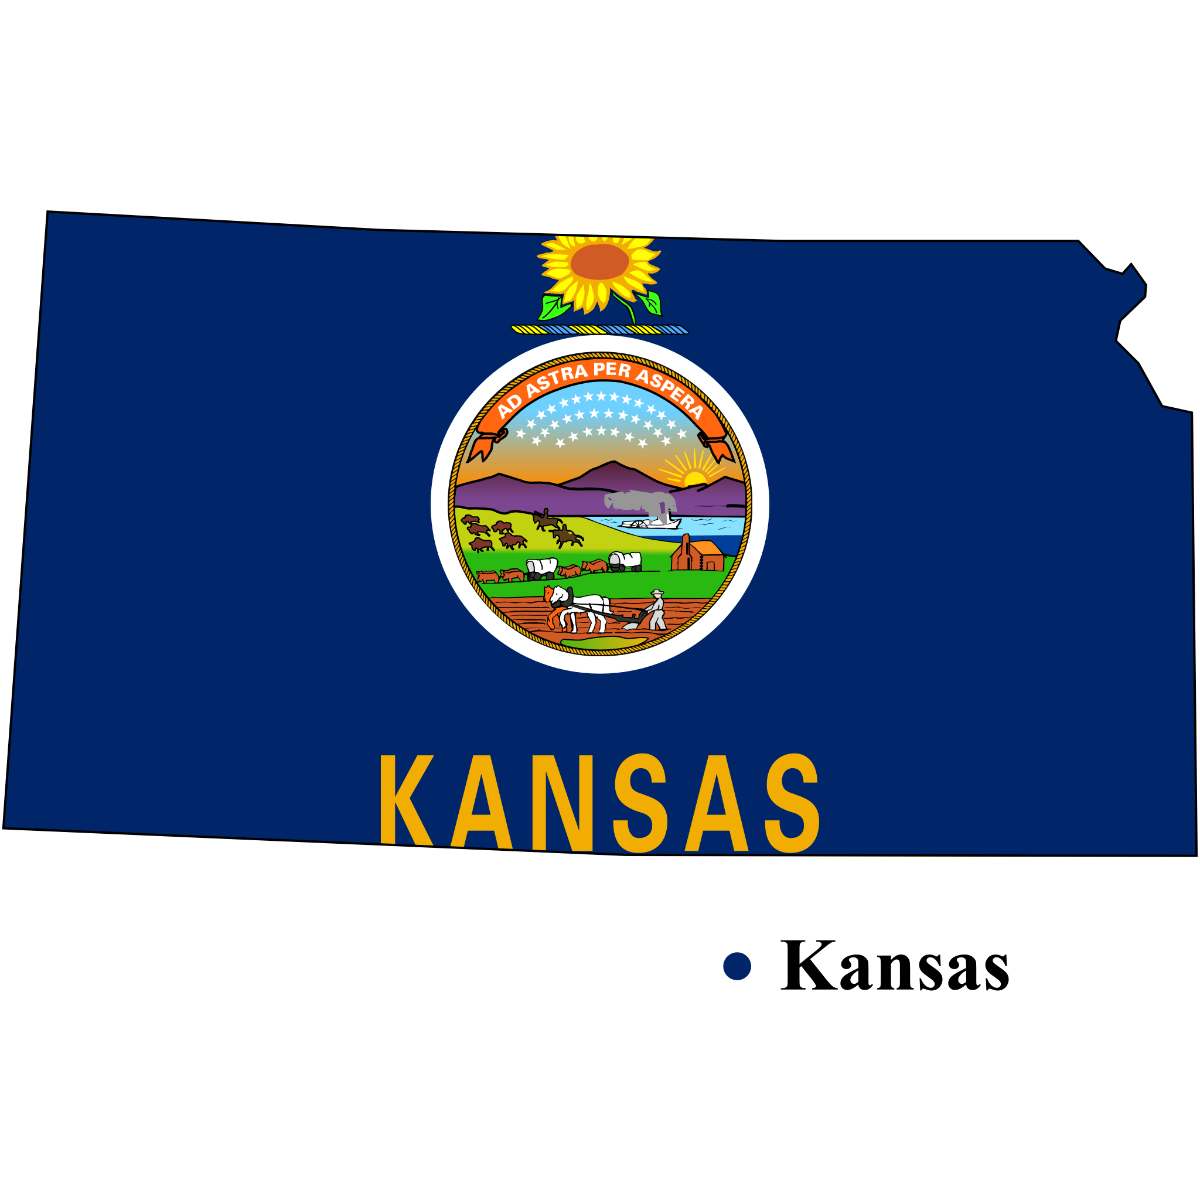 Kansas State map cutout with Kansas flag superimposed